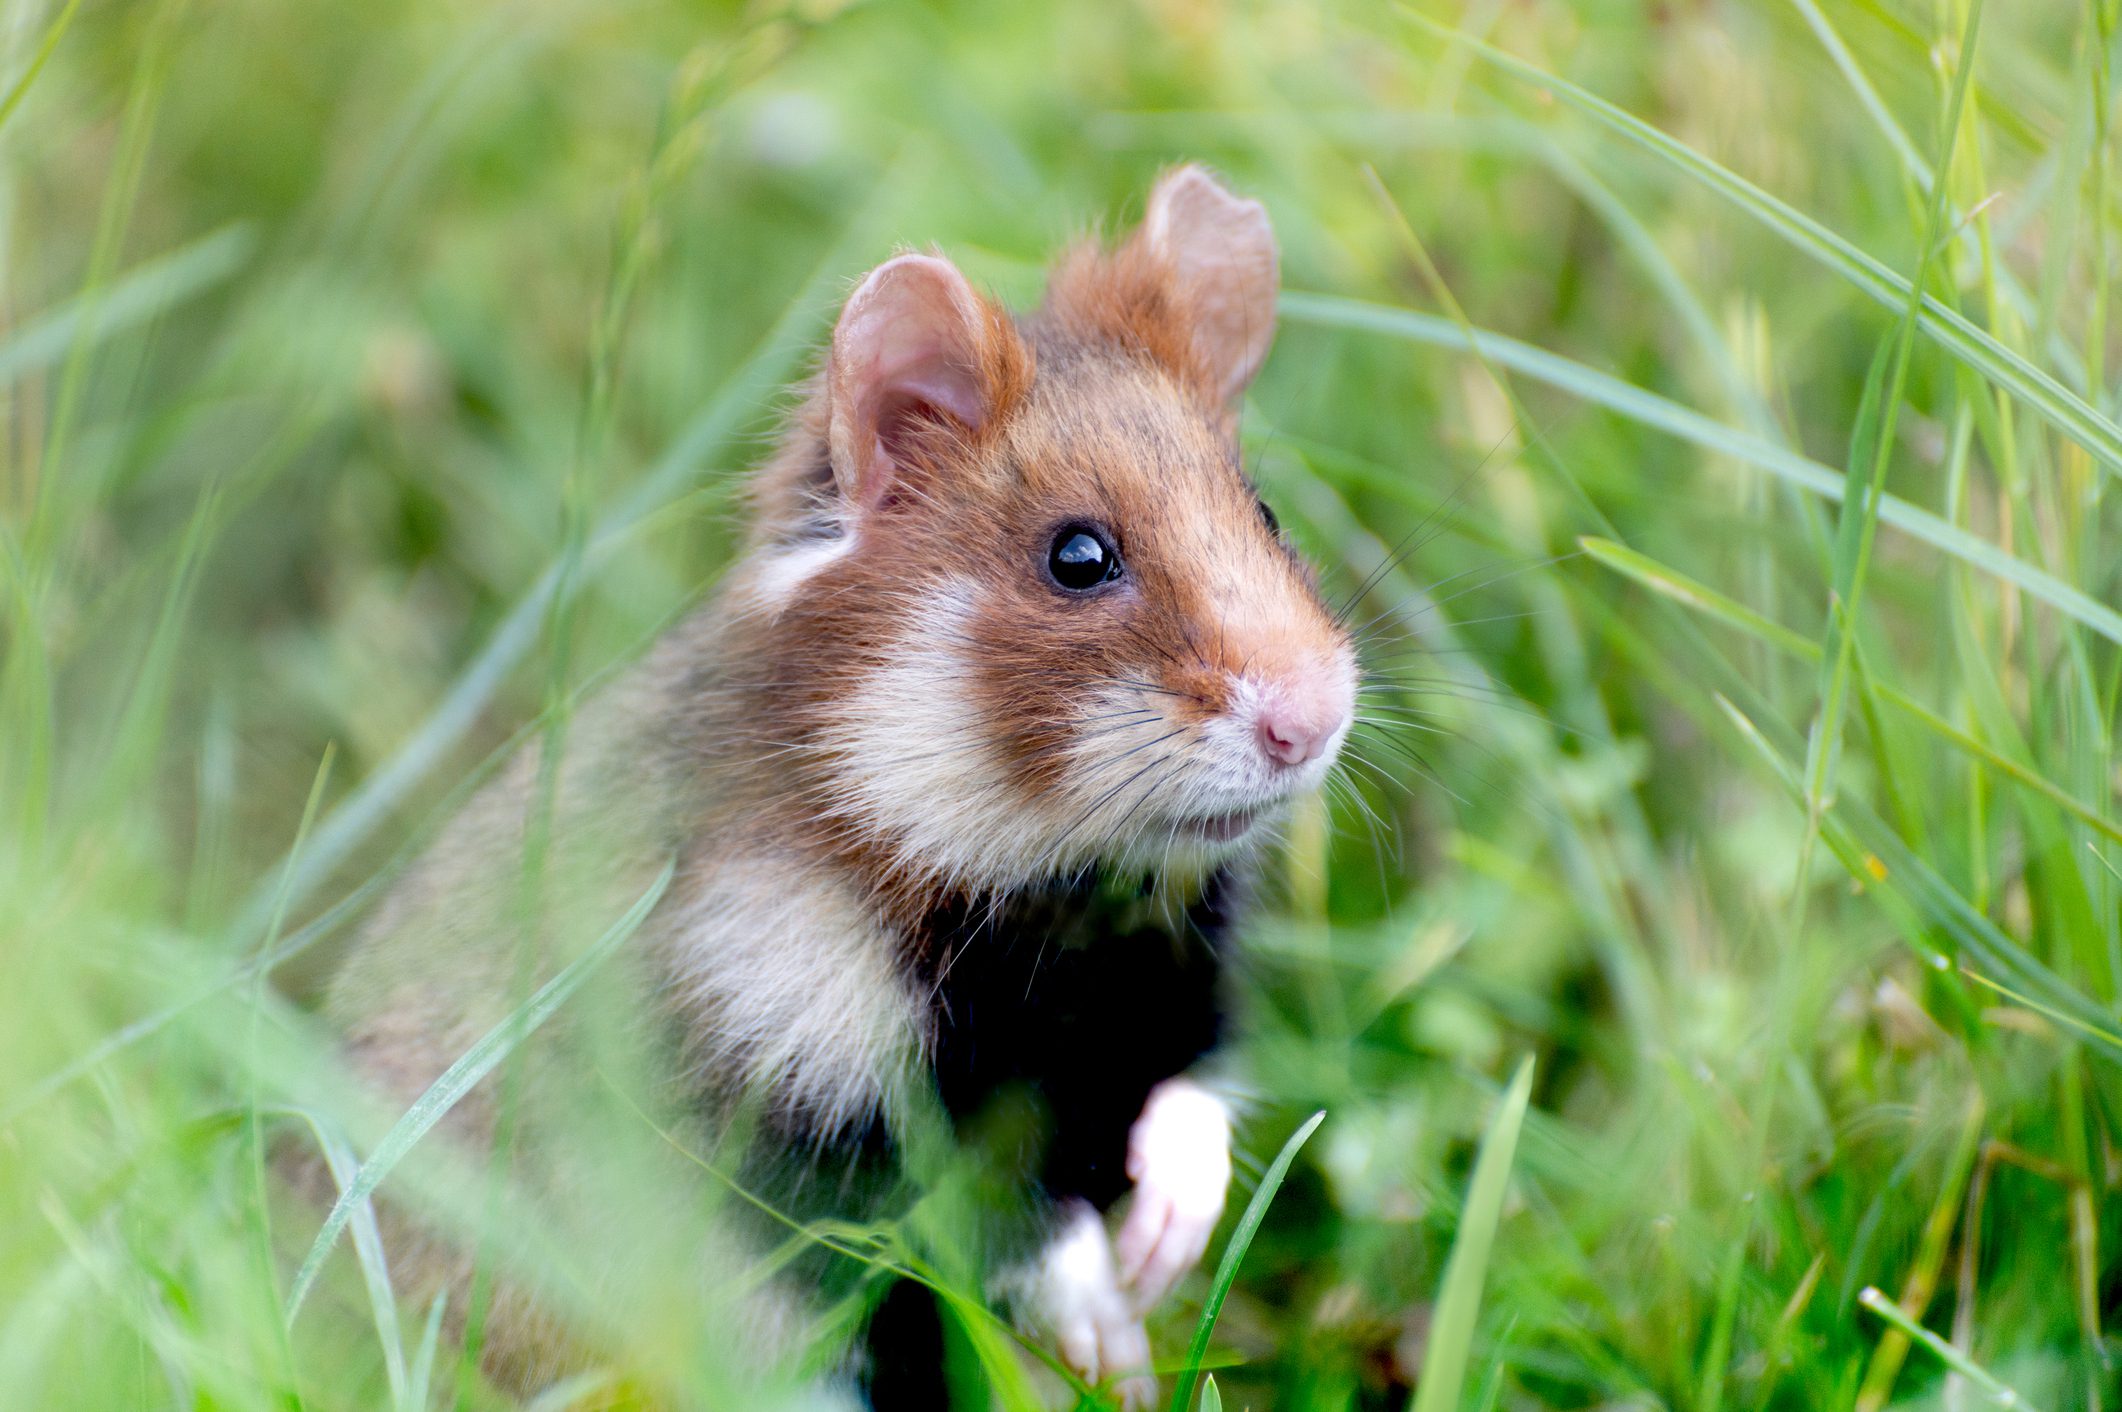 Close-up of a European hamster in a grassy field in Austria